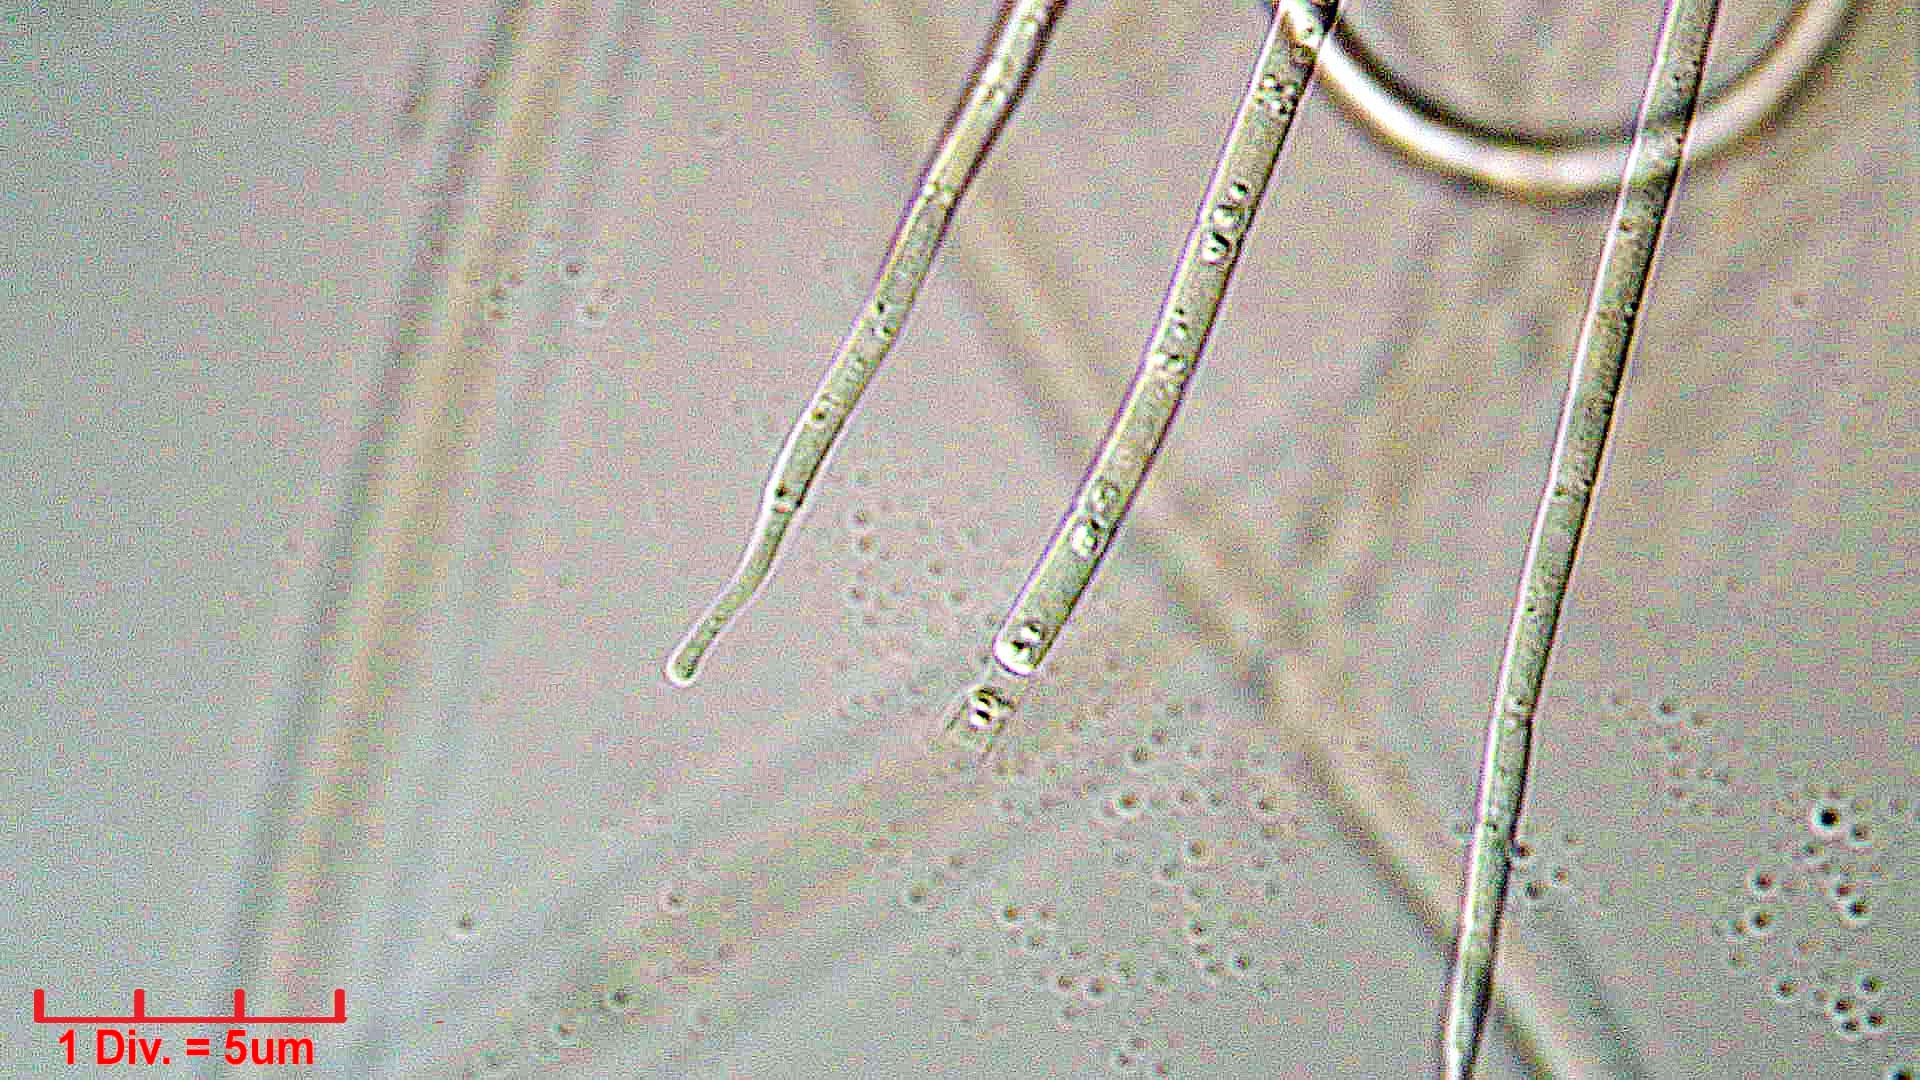 ././././Cyanobacteria/Oscillatoriales/Coleofasciculaceae/Geitlerinema/splendidum/geitlerinema-splendidum-294.jpg